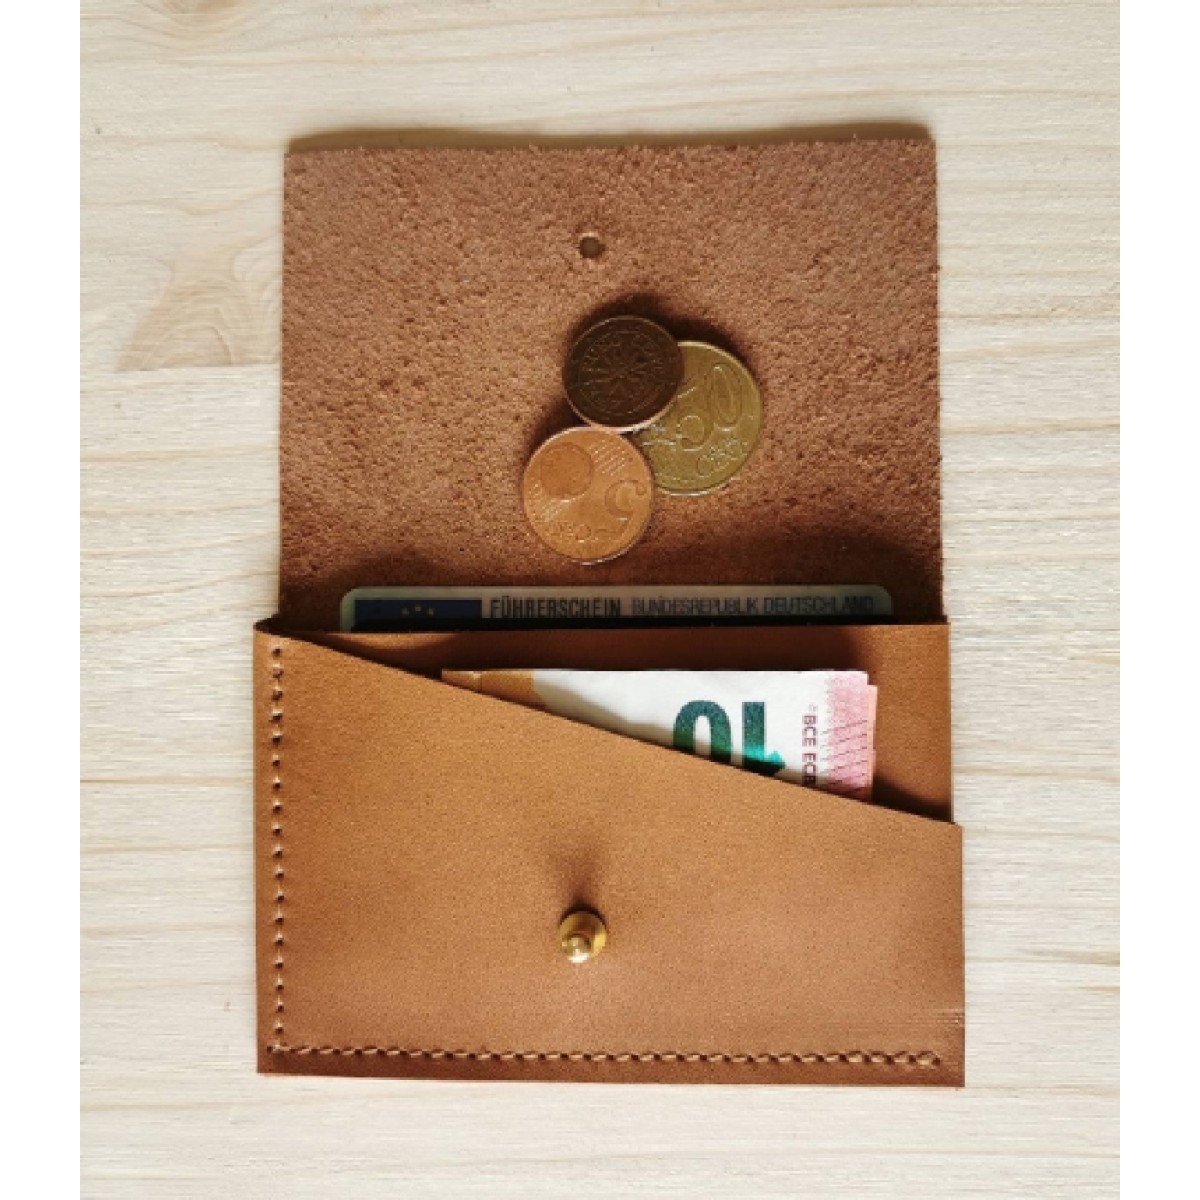 BSaite / Mini Leder Portemonnaie / Partygeldbörse / Leder Kartenetui / tiny wallet / boho